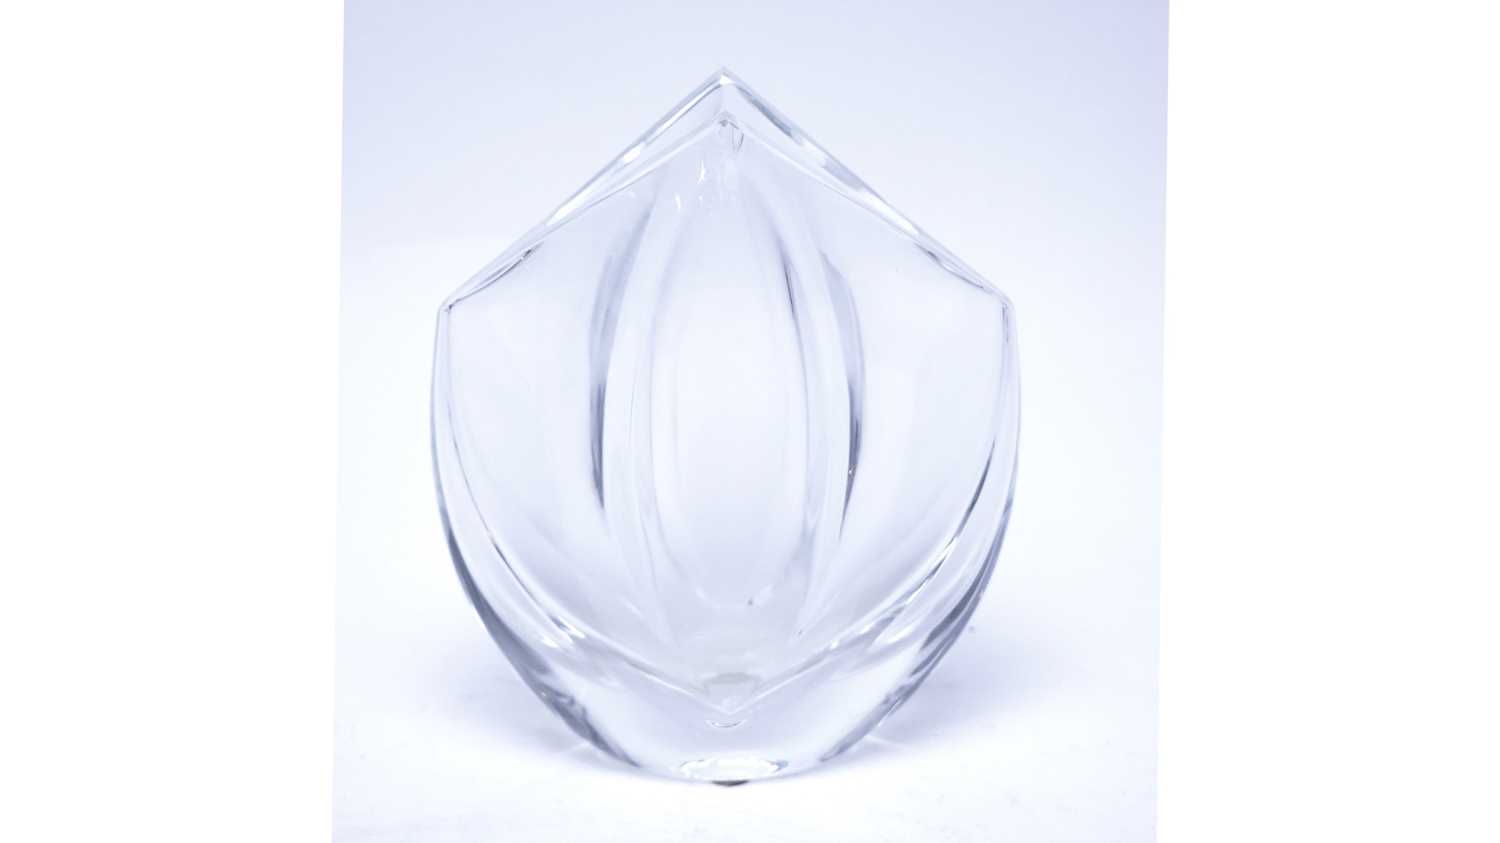 Robert Rigot for Baccarat, France: Giverney clear glass vase,